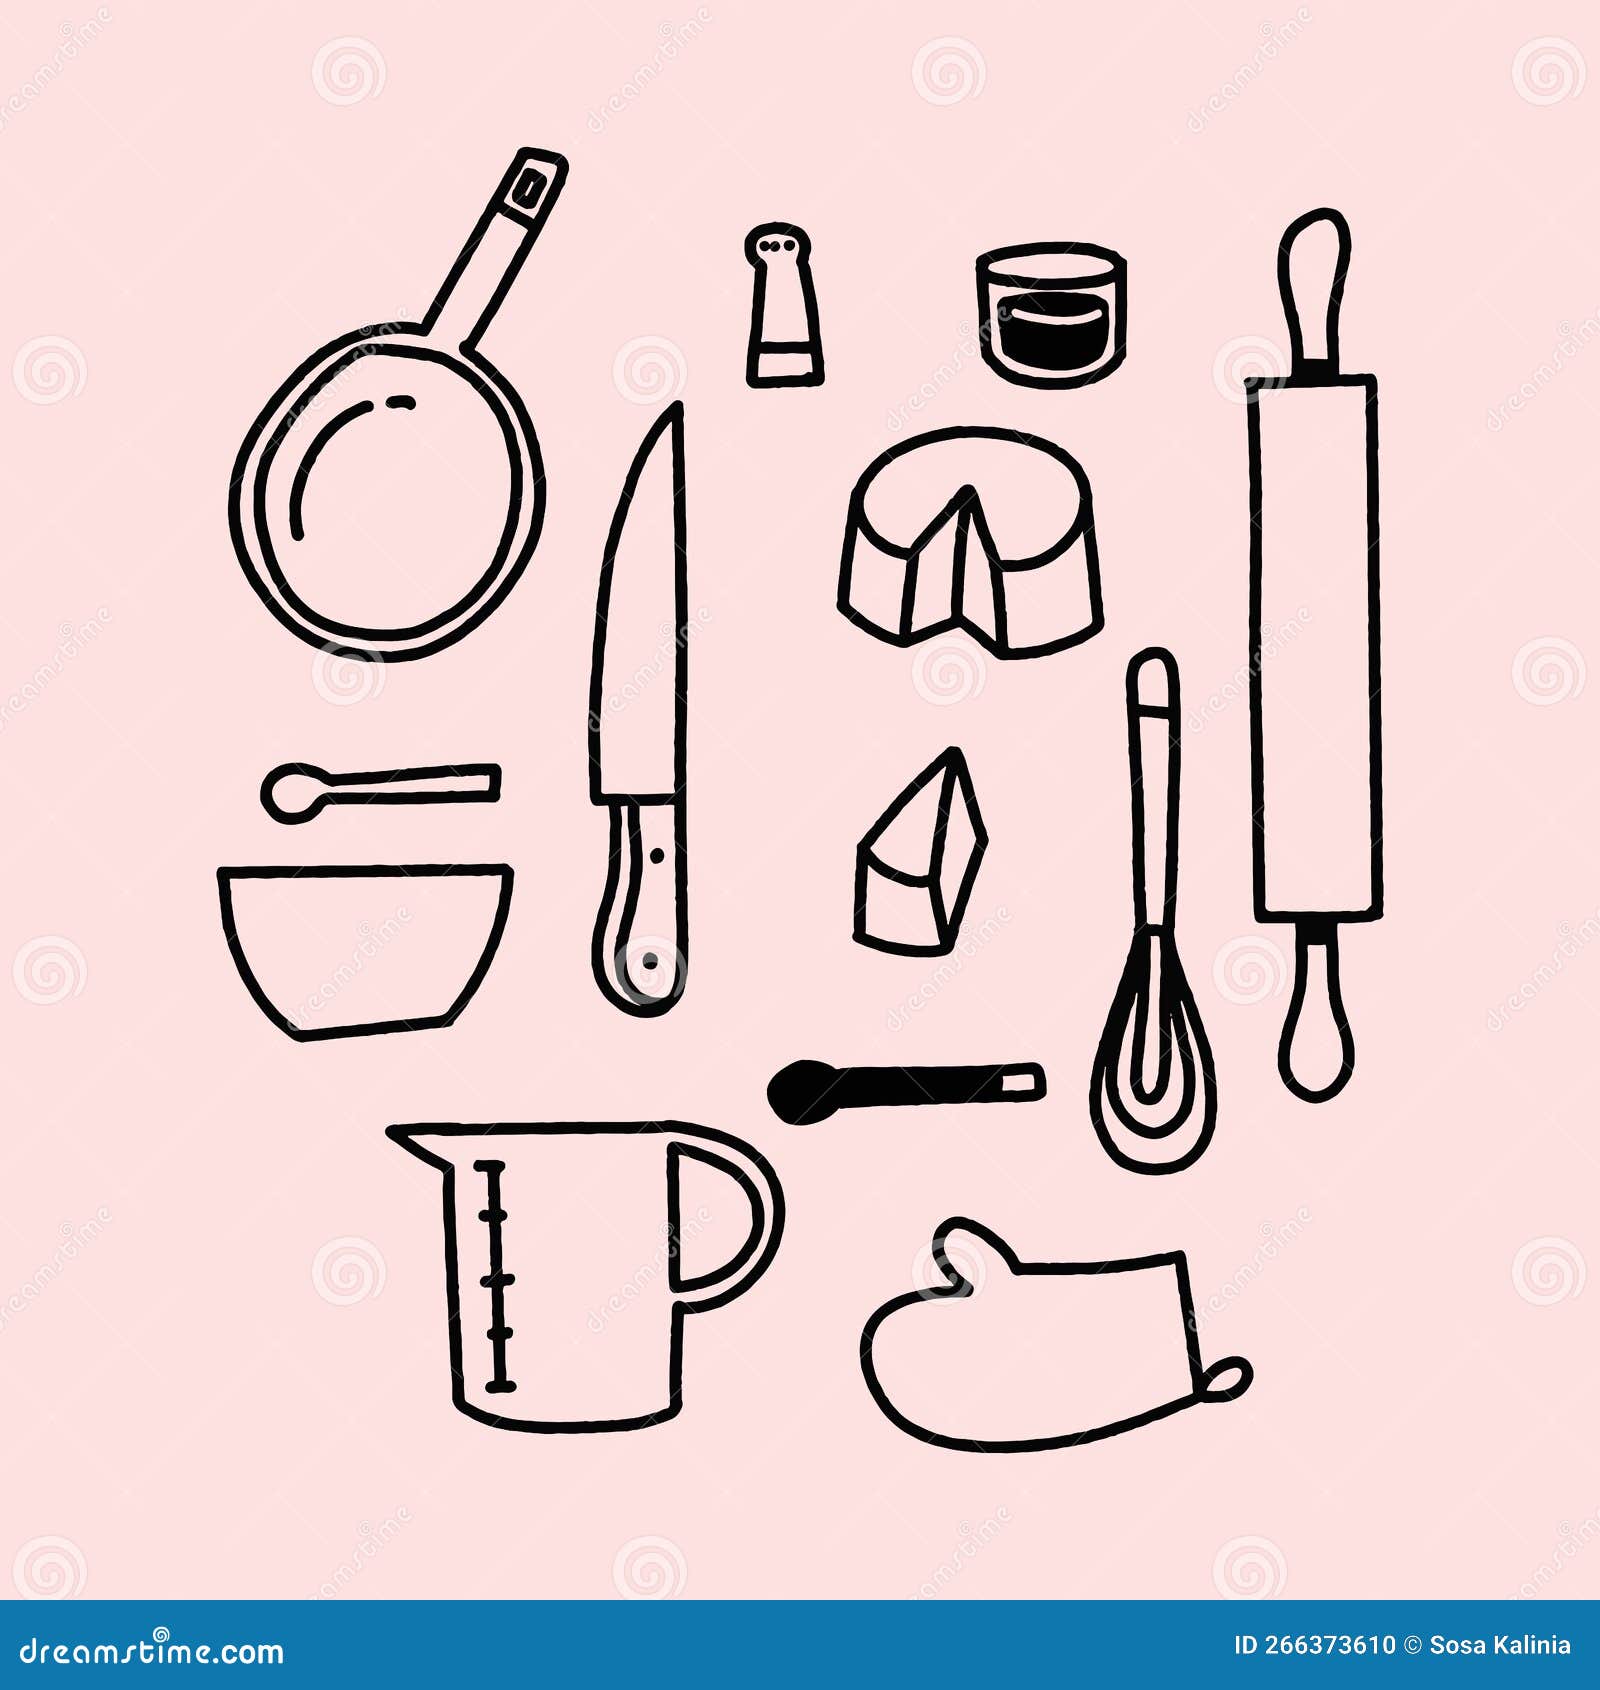 Kitchen utensils illustration set line drawing - Stock